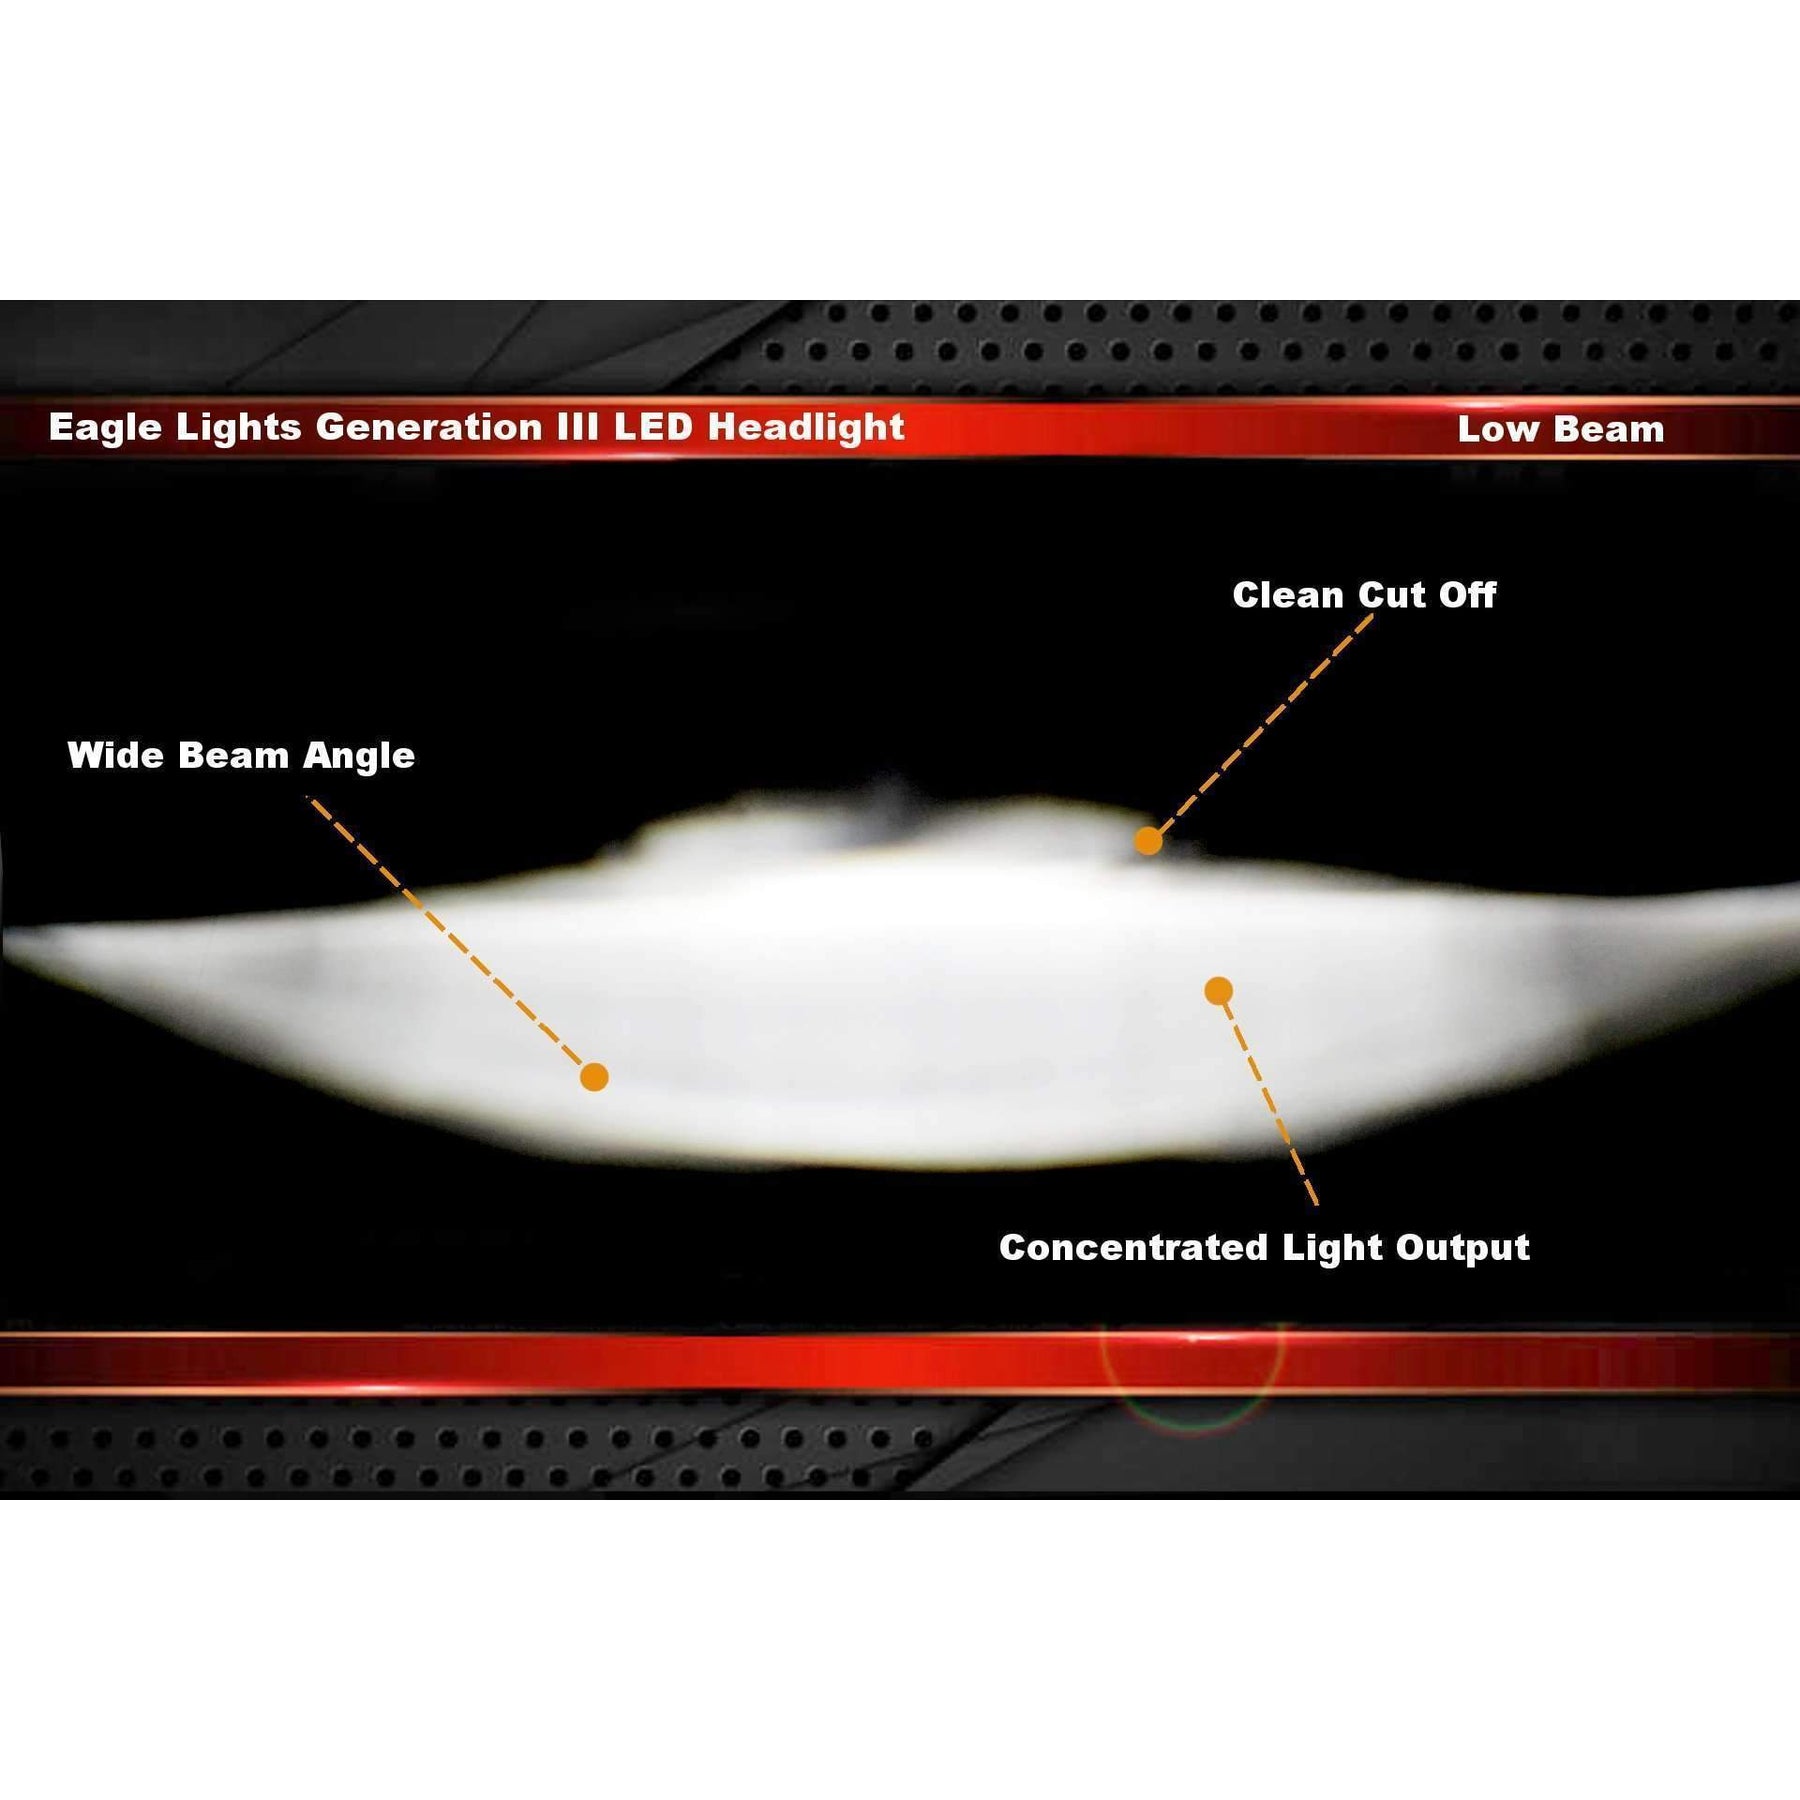 Eagle Lights 5 3/4" LED Headlight for Harley Davidson and Indian M